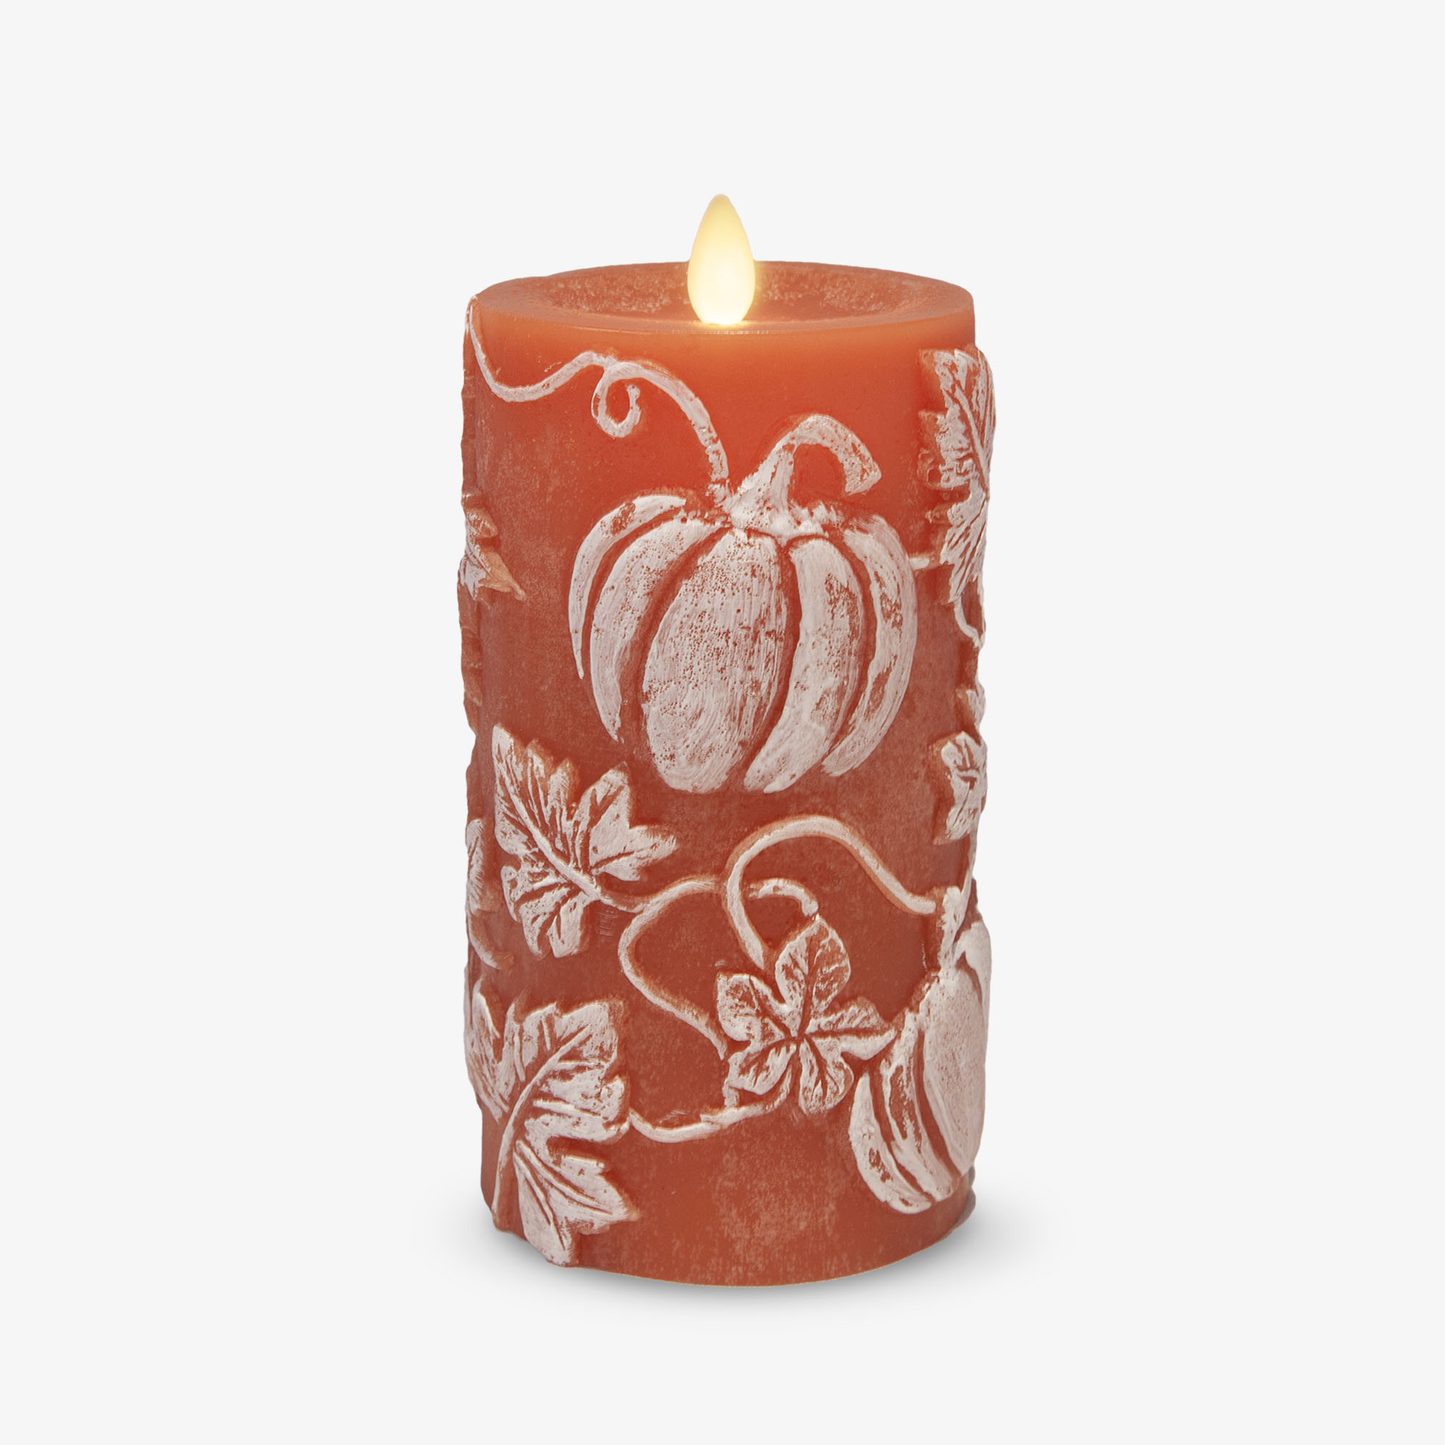 Embossed Leaves & Pumpkins Flameless Candle Pillar - Recessed Top